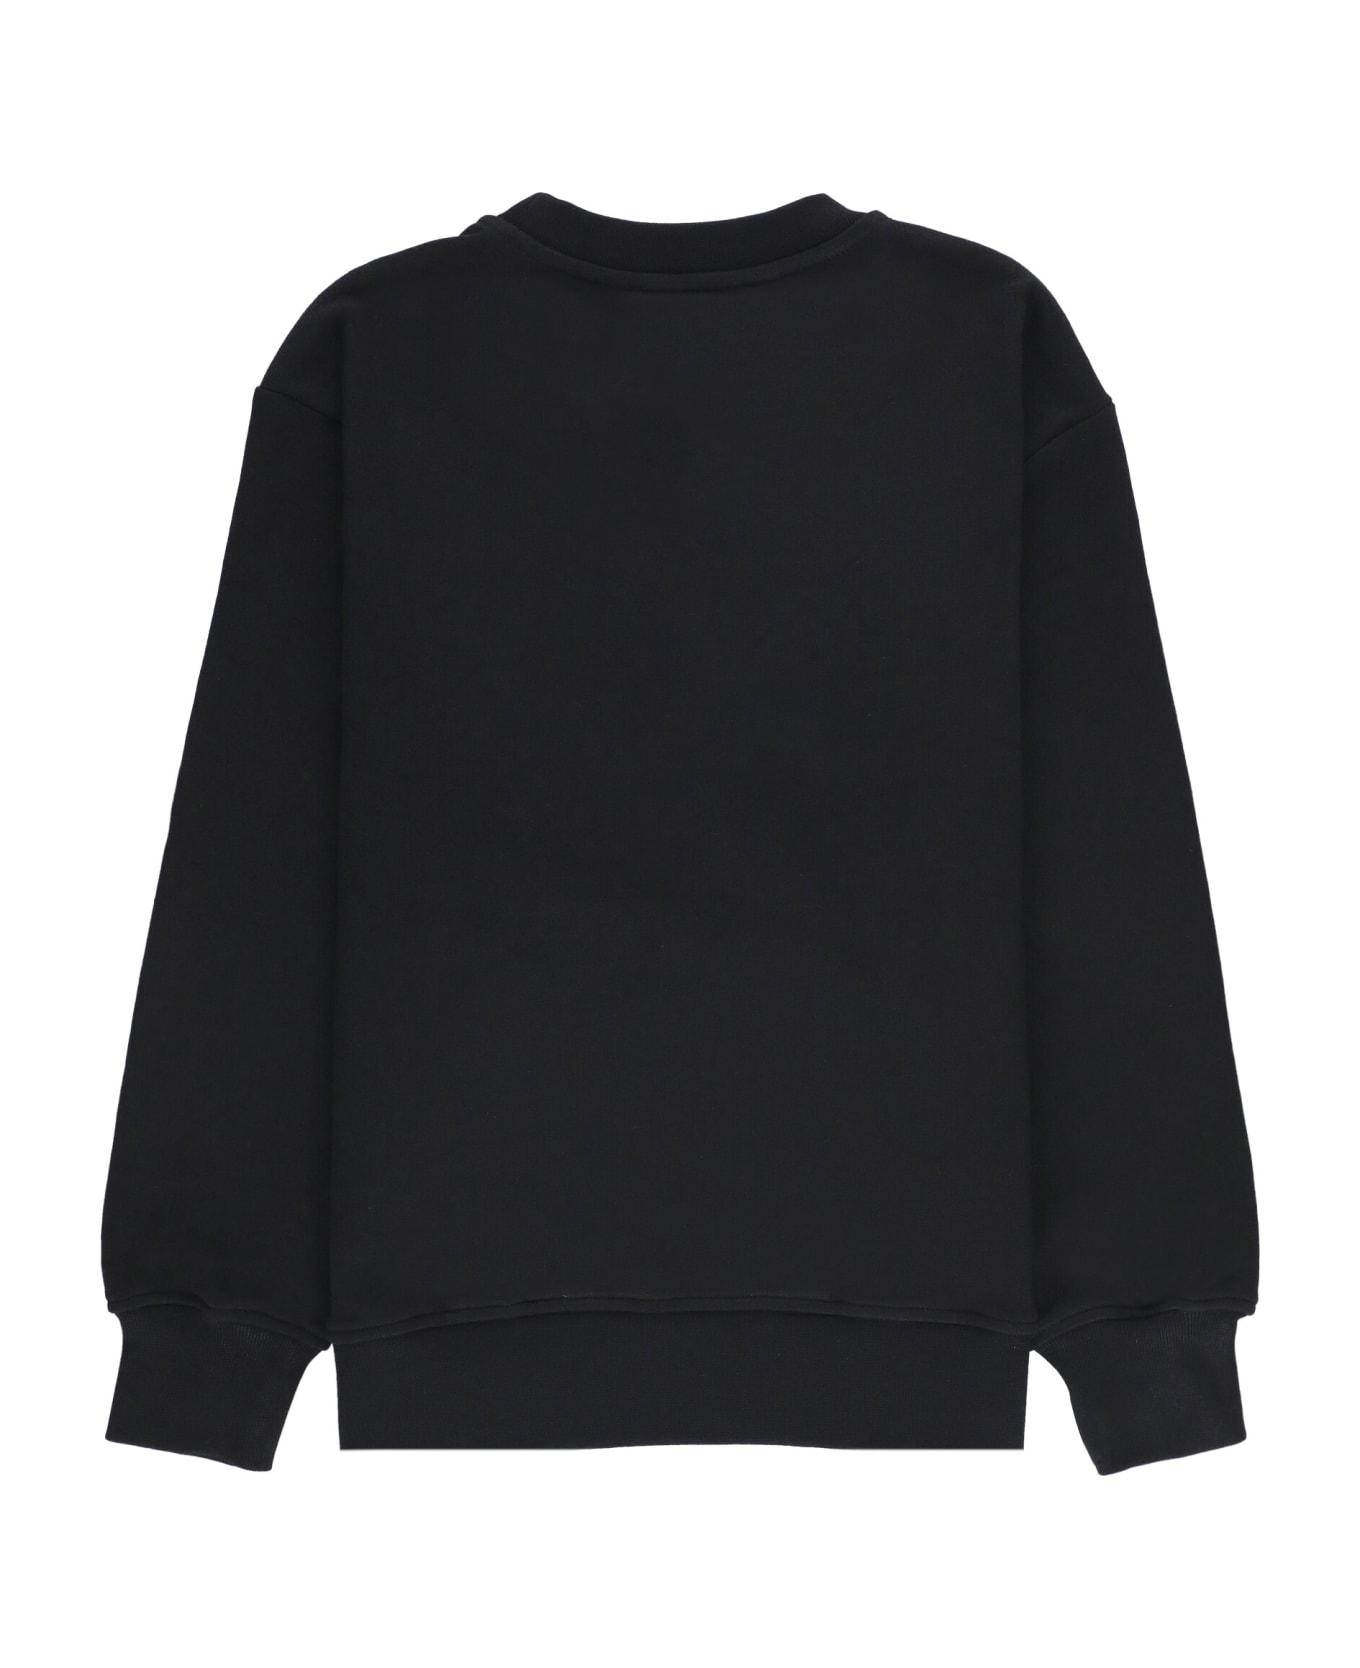 MSGM Logoed Sweatshirt - Black